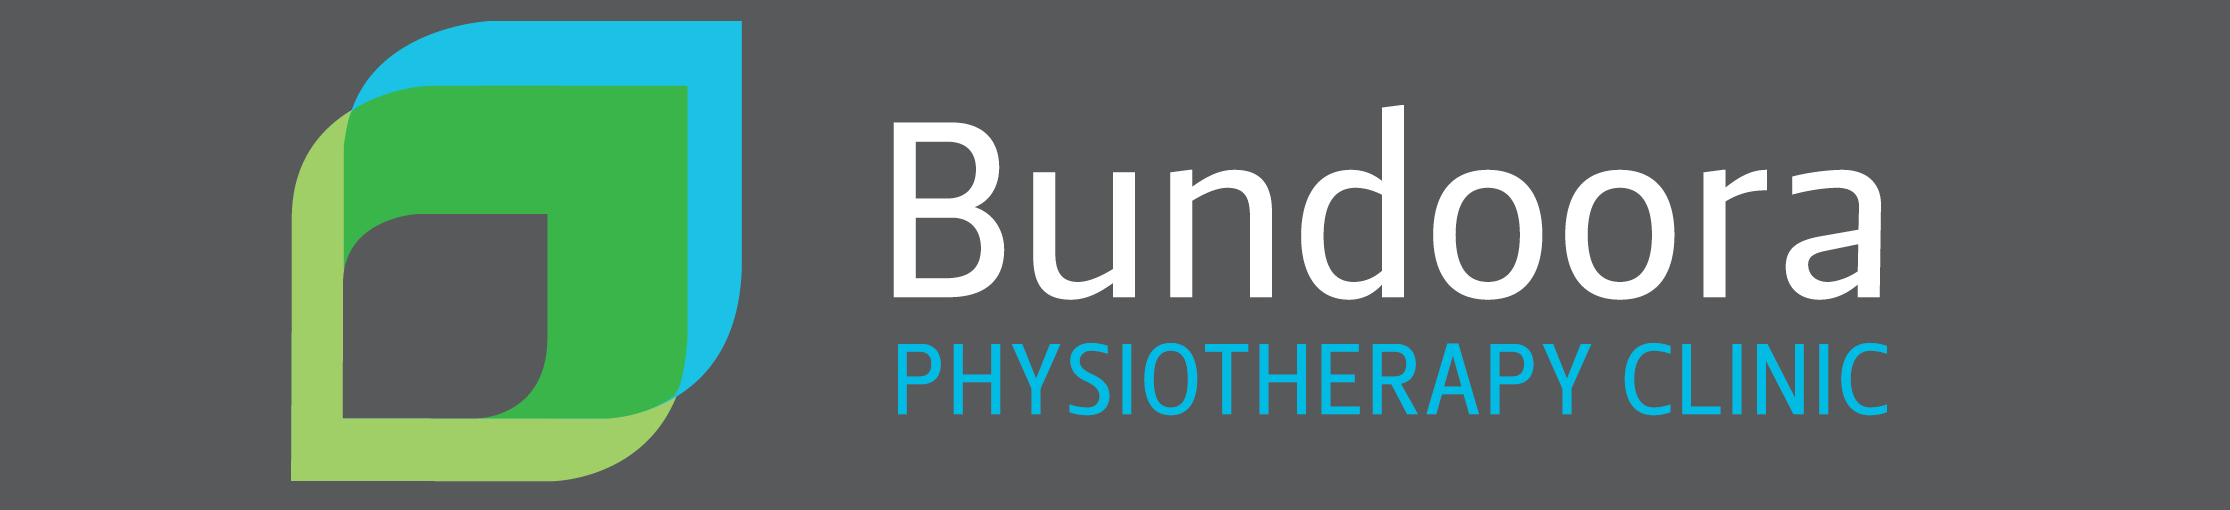 Bundoora Physiotherapy Clinic